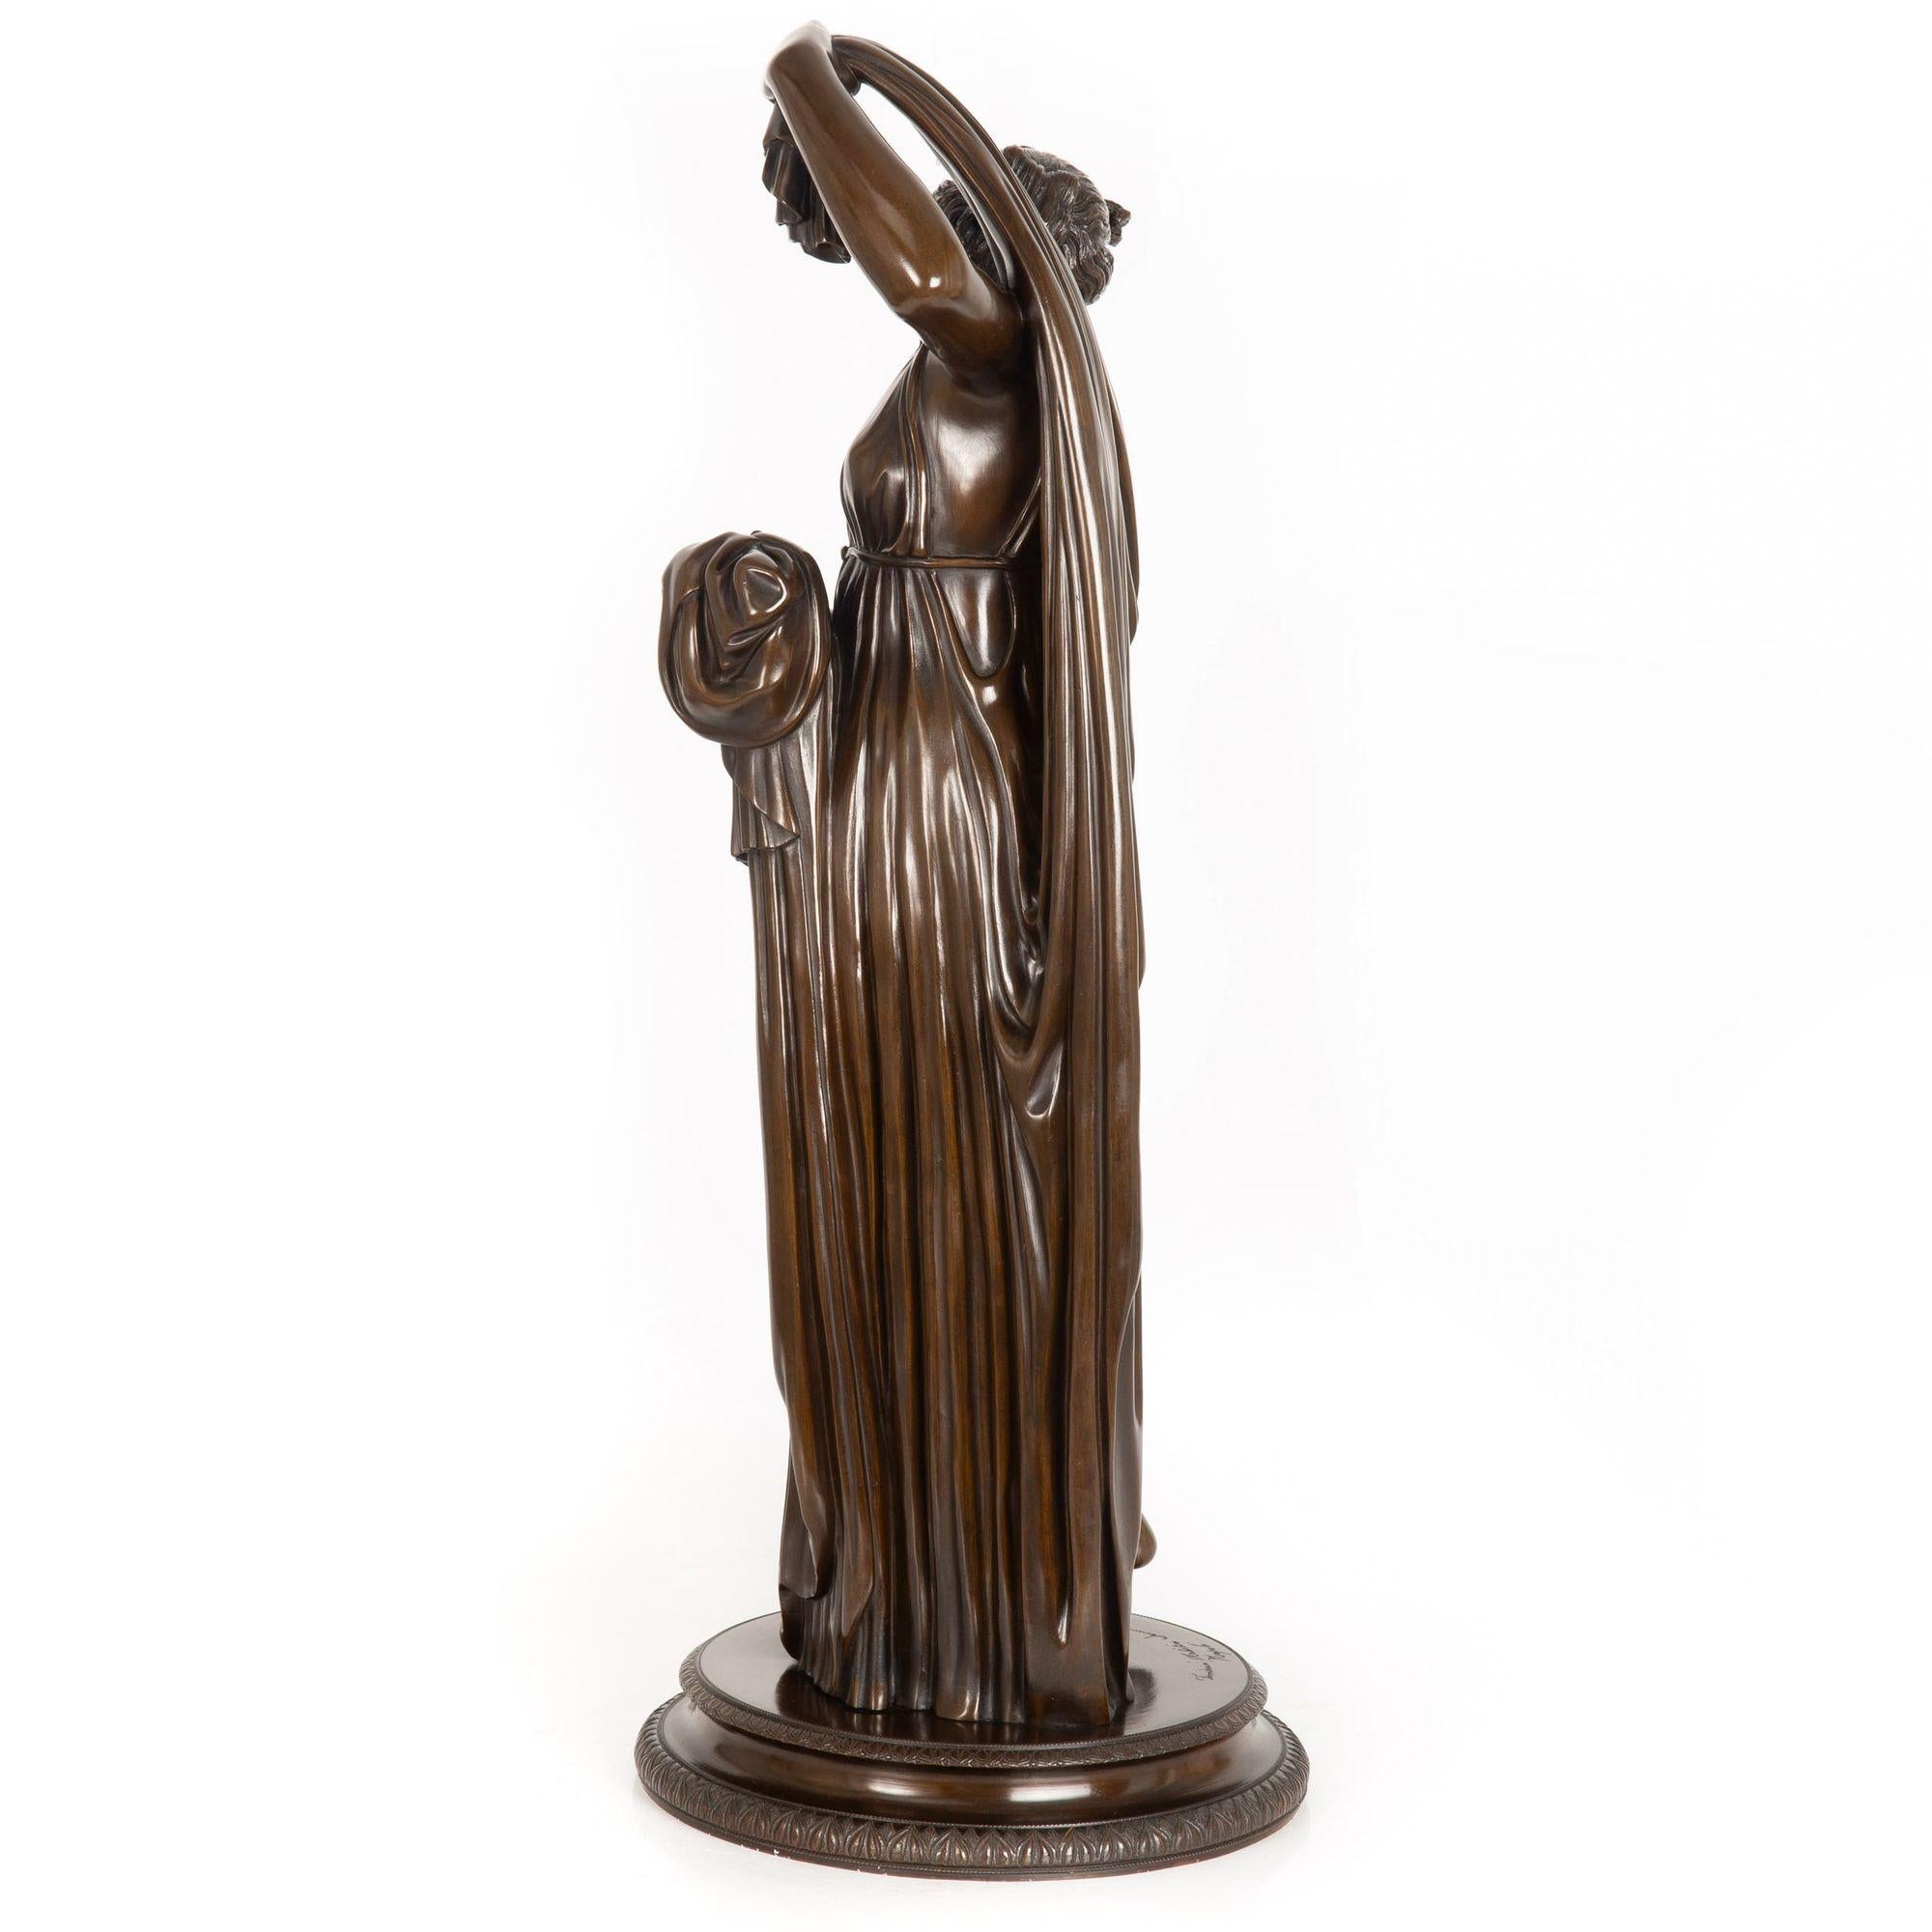 Italian 19th Century Grand Tour Bronze Sculpture “Callipygian Venus” of Antiquity For Sale